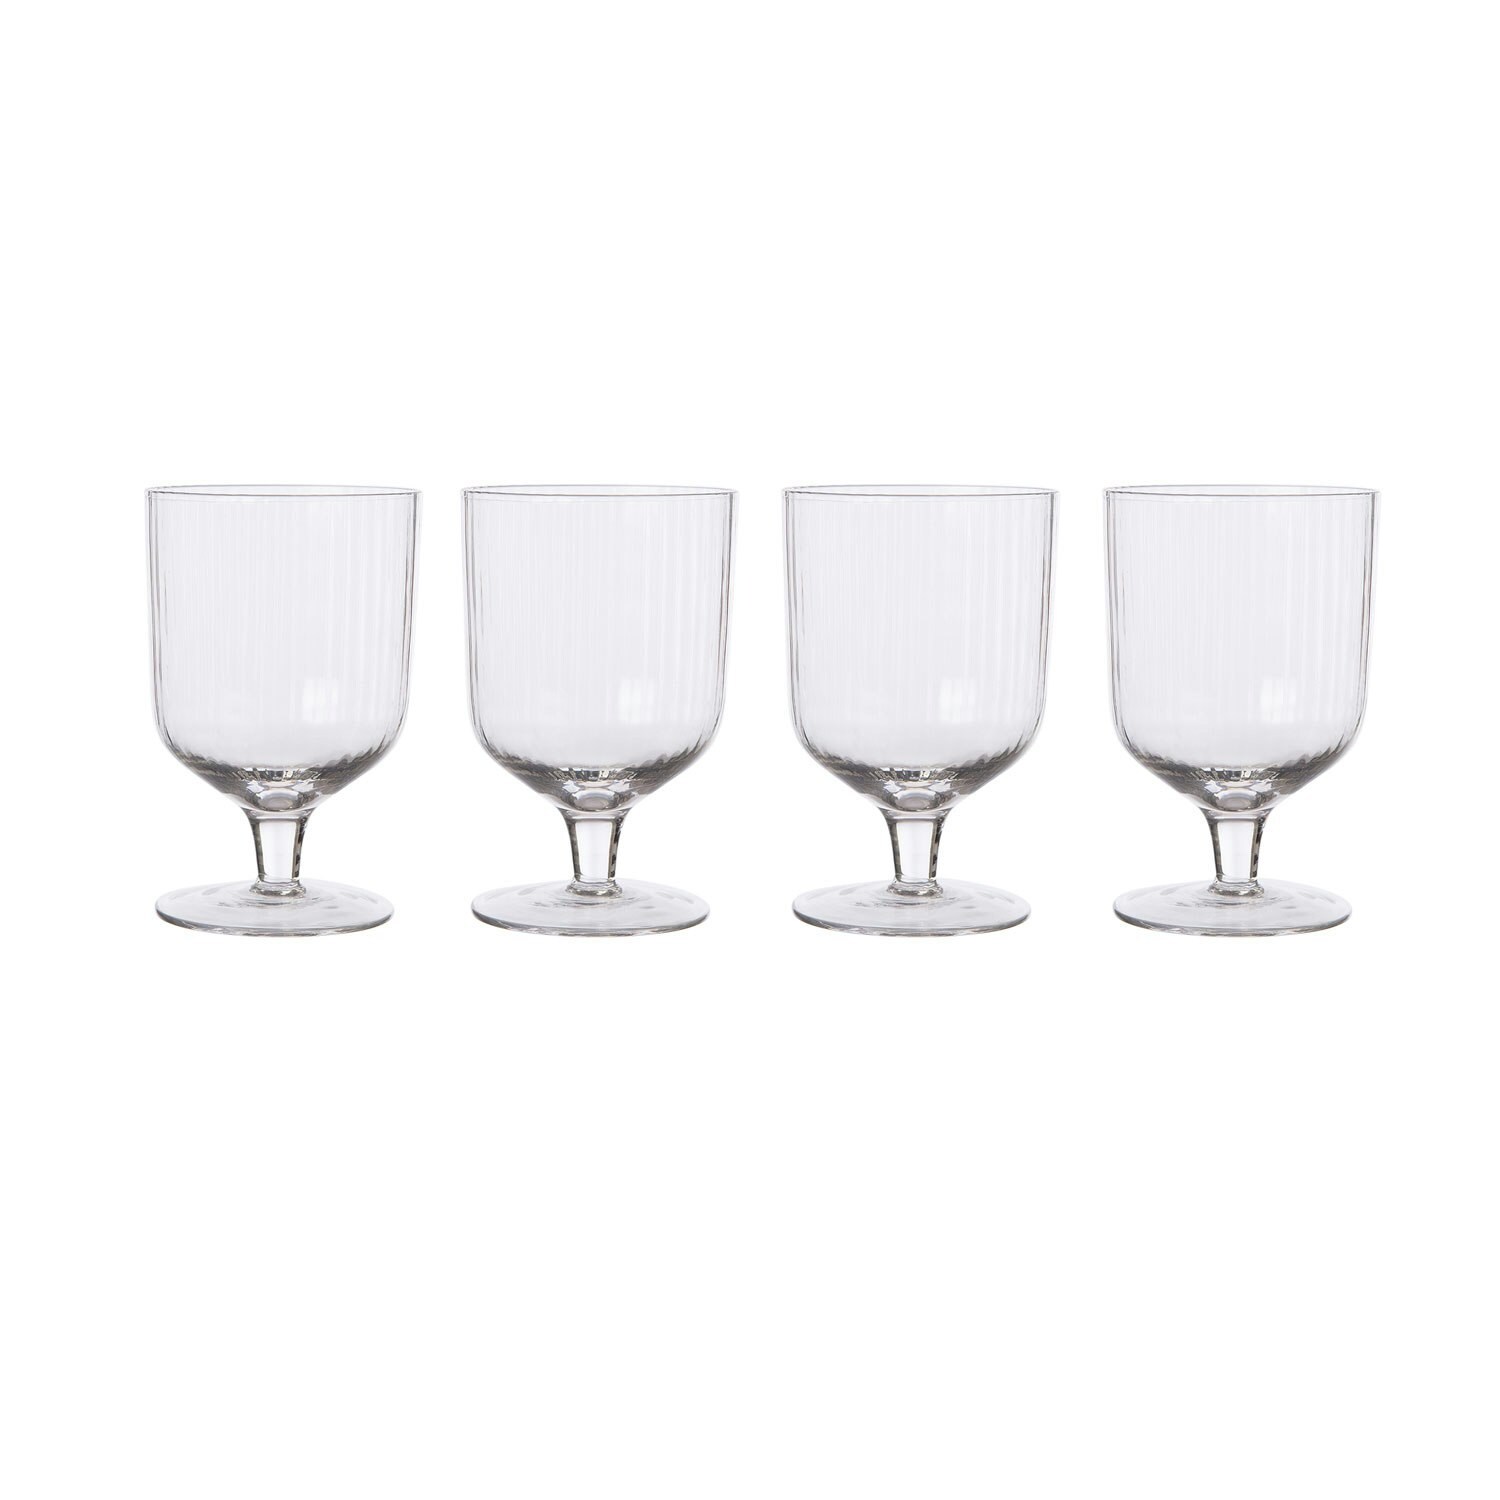 https://royaldesign.com/image/2/ernst-drinking-glasses-fluted-with-foot-4-pack-0